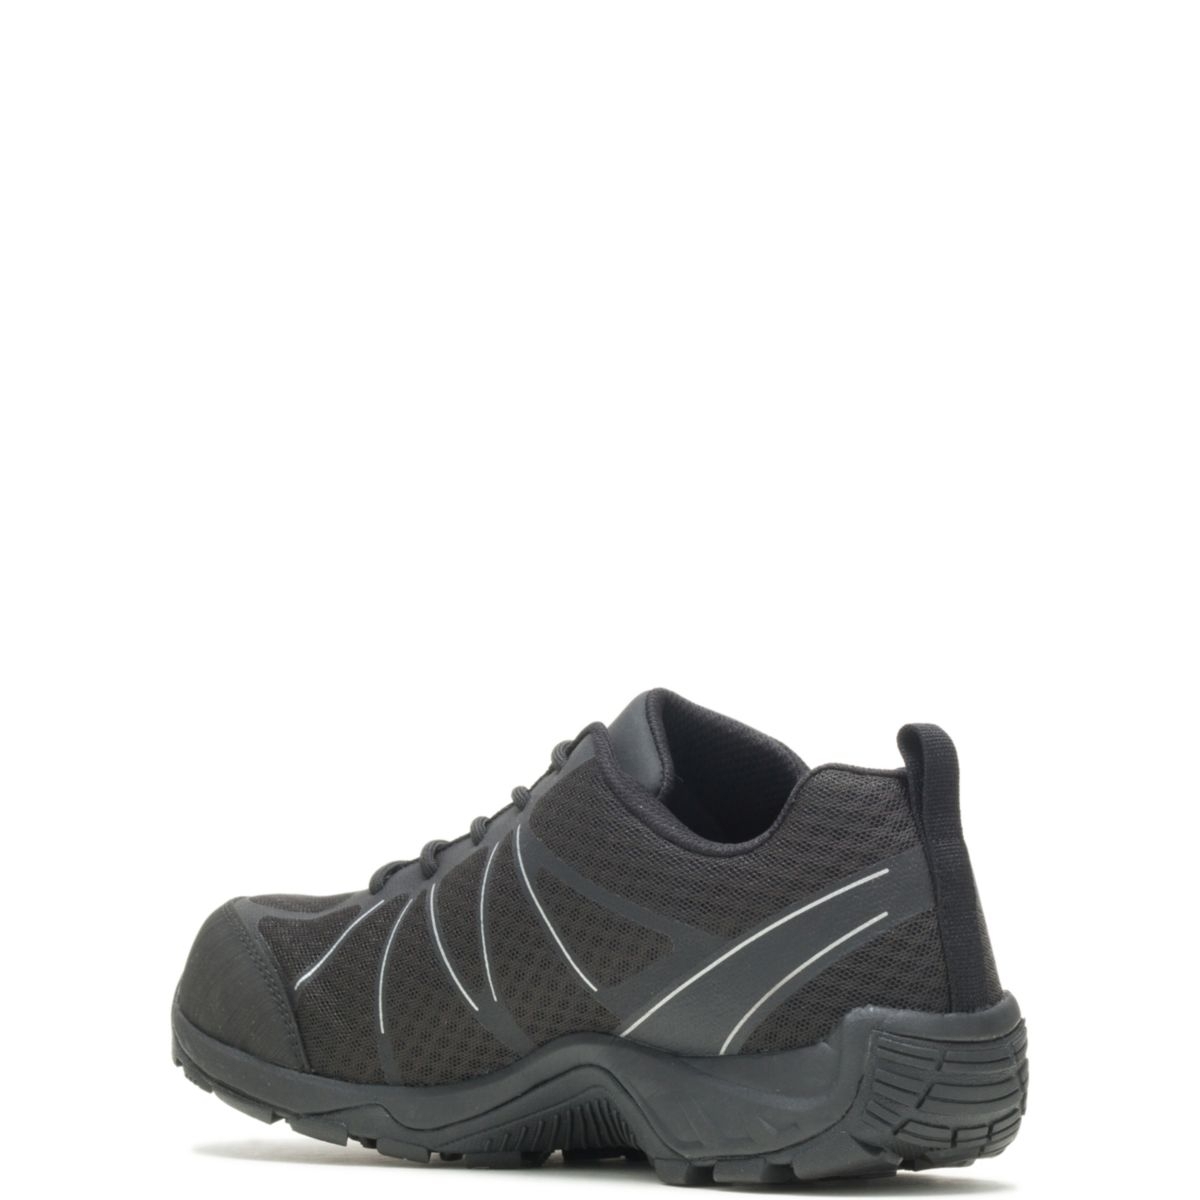 WOLVERINE Men's Amherst II CarbonMAXÂ® Composite Toe Work Shoe Black - W201147 BLACK - BLACK, 11.5 X-Wide